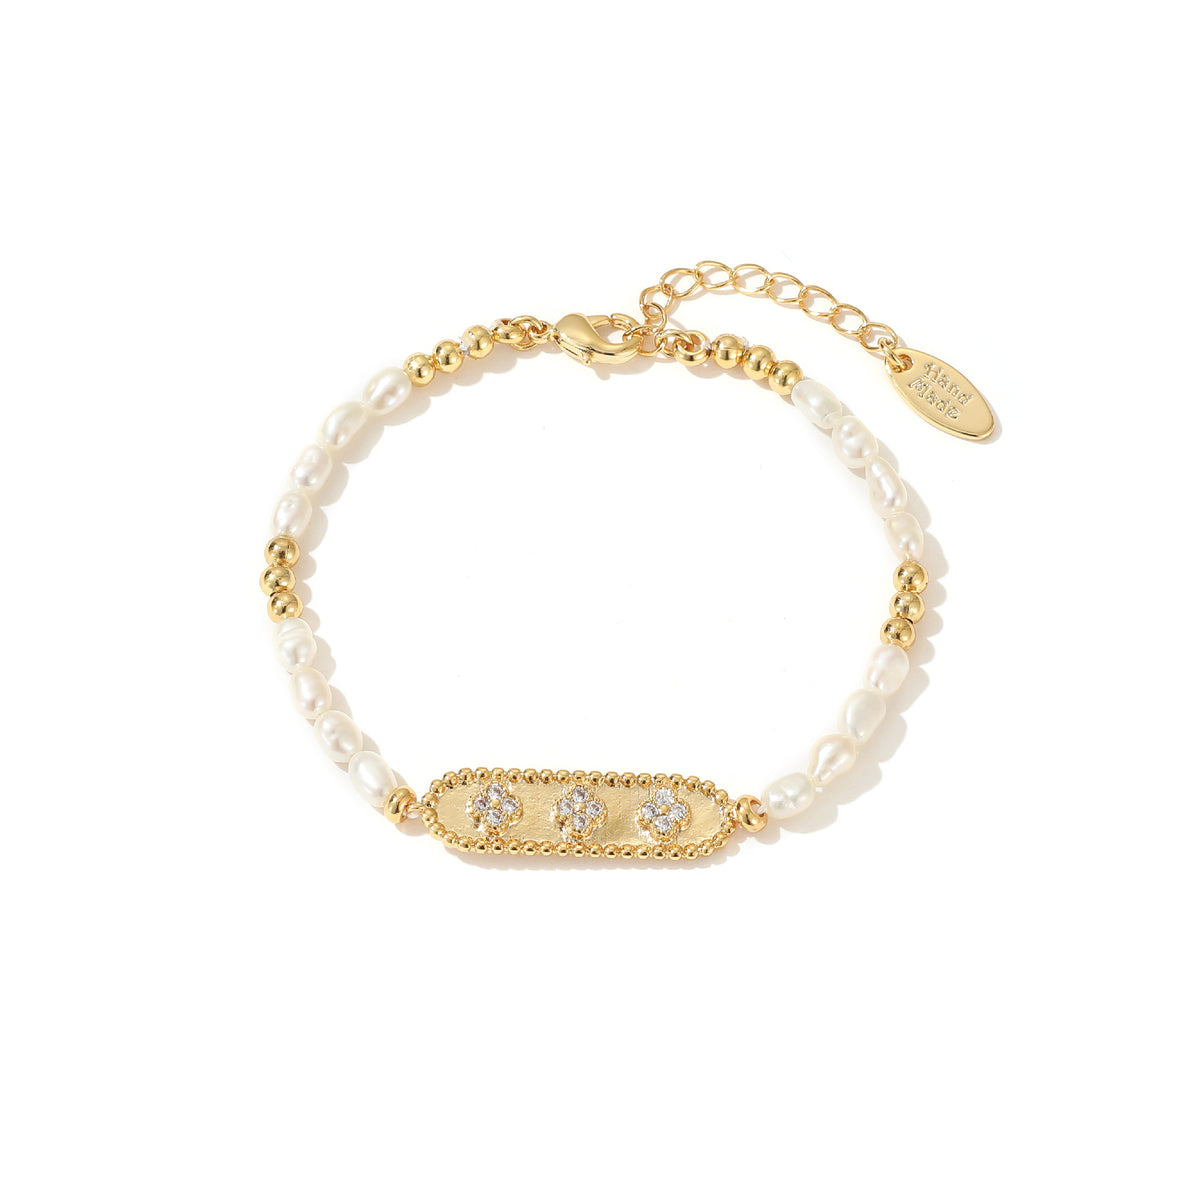 Eleanor - 18K Exquisite Bejeweled Natural Pearls Bracelet